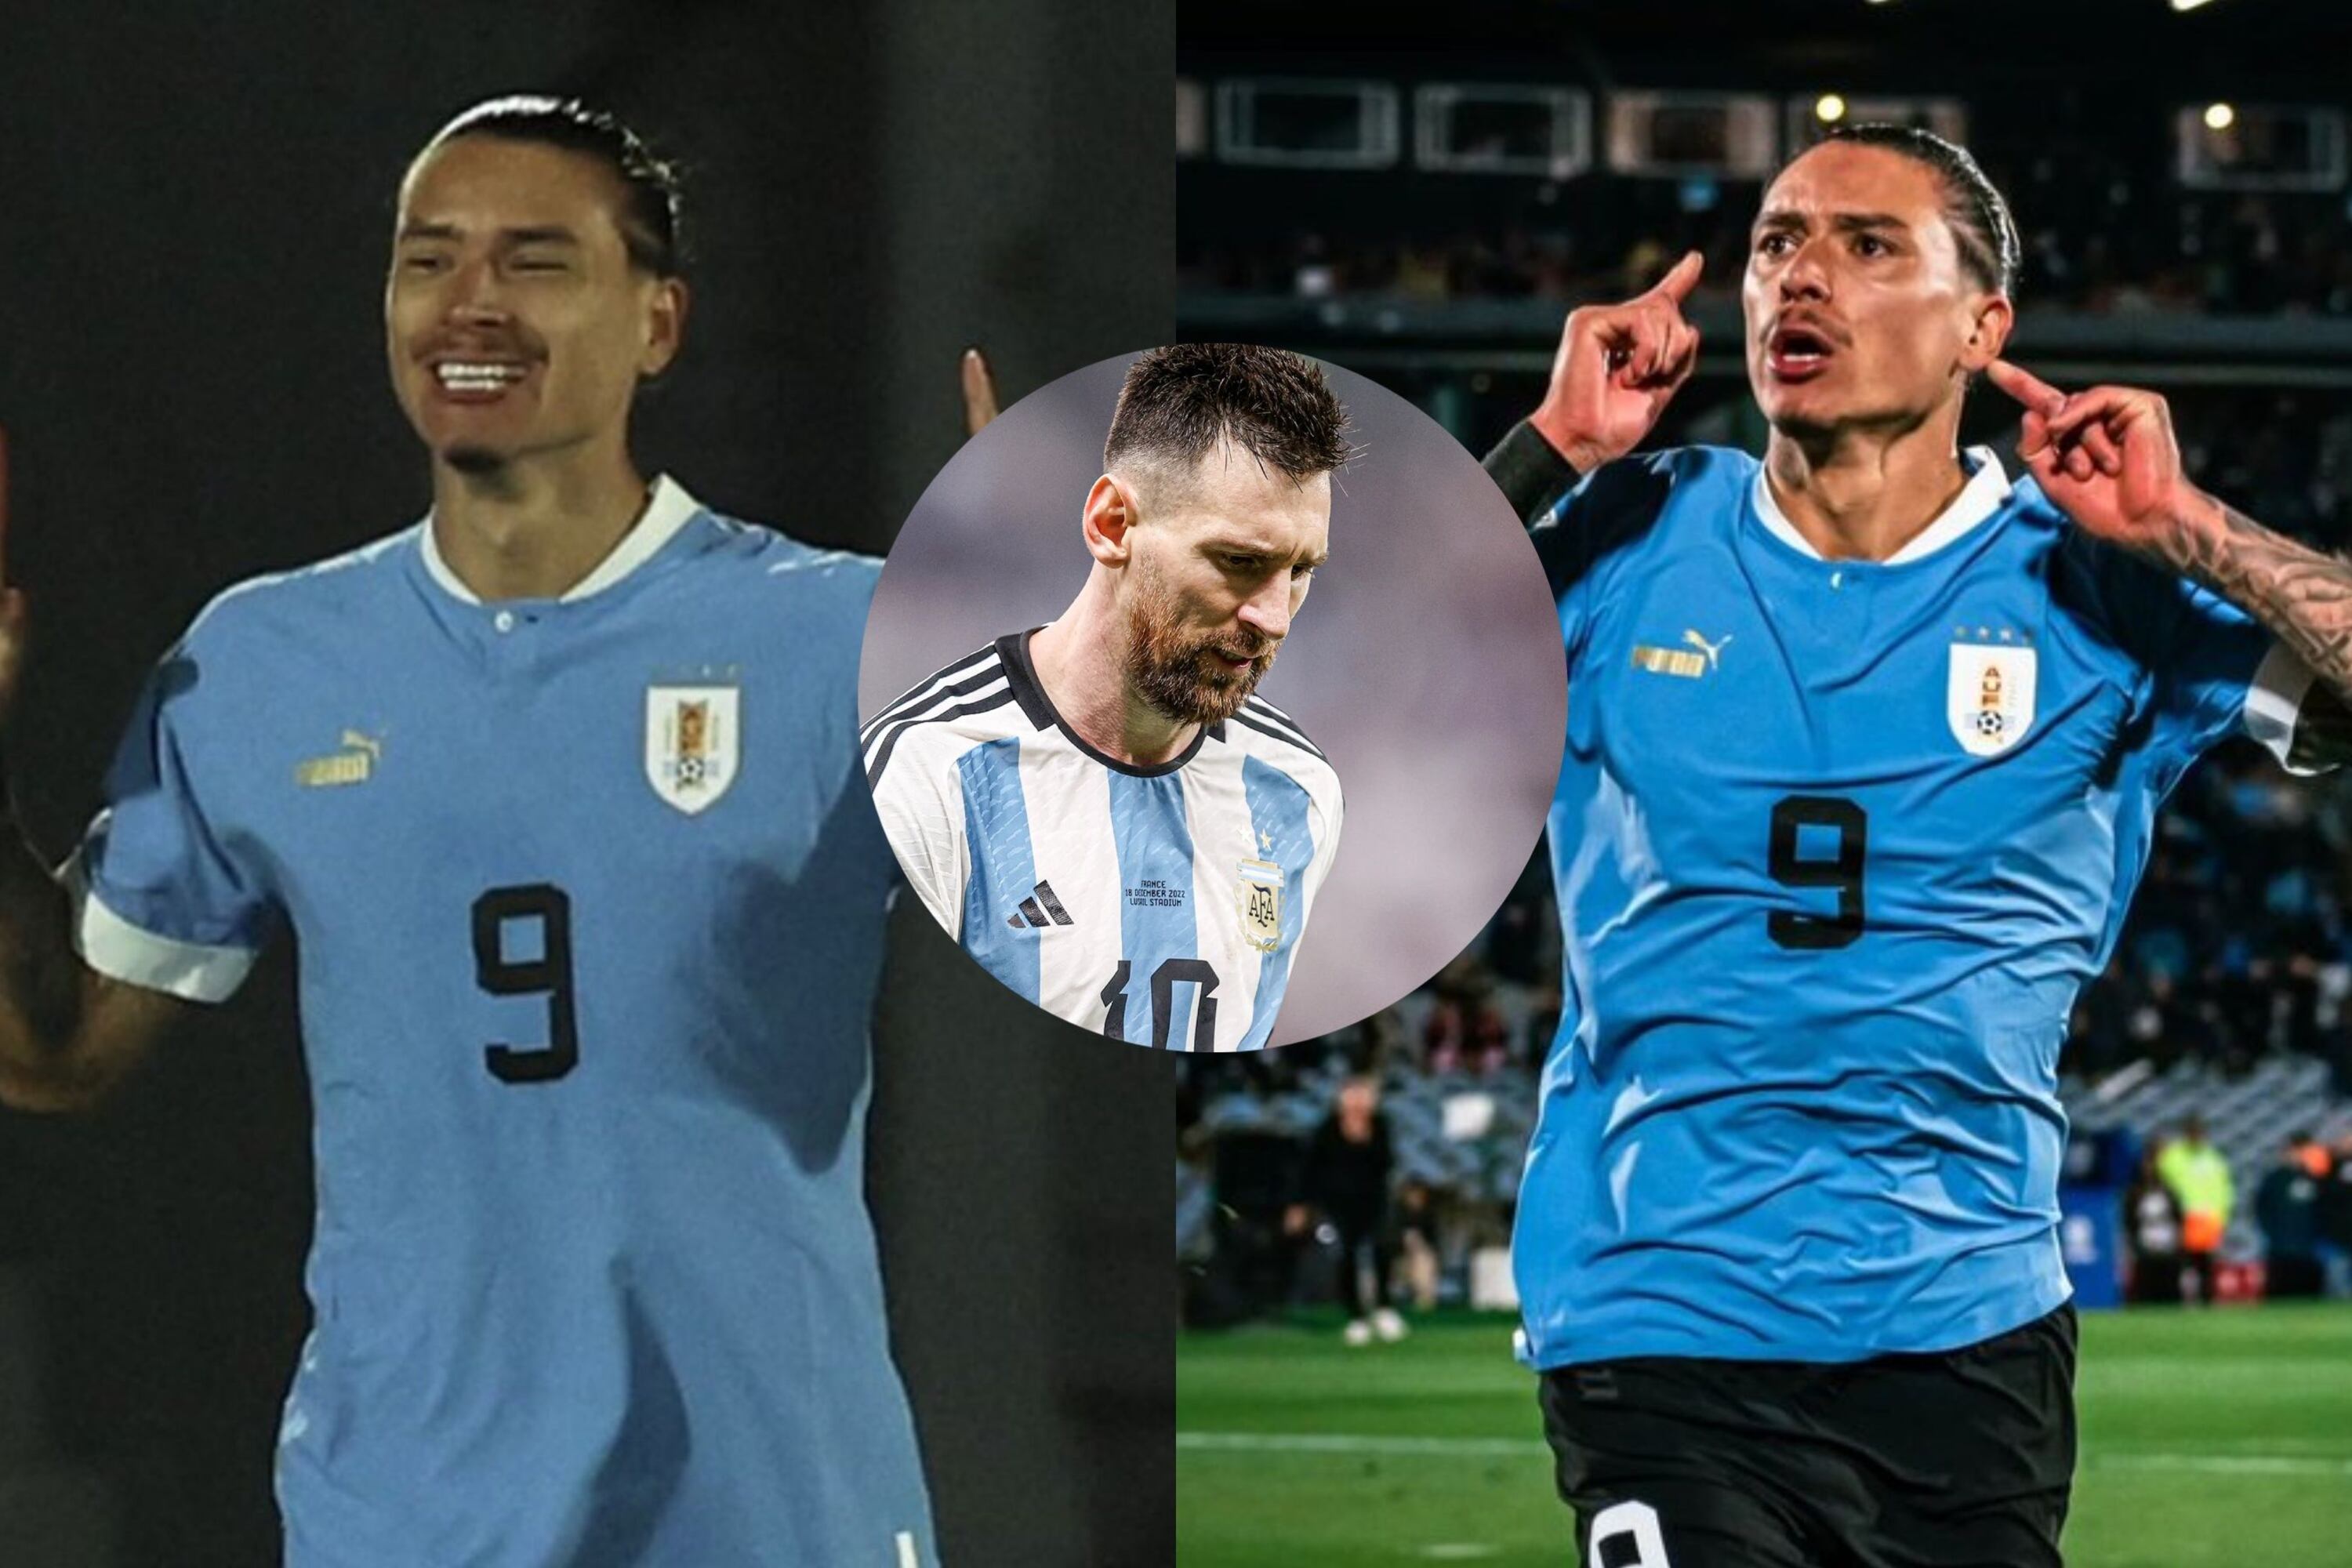 With a goal from Darwin Nunez, Uruguay defeated Argentina in La Bombonera